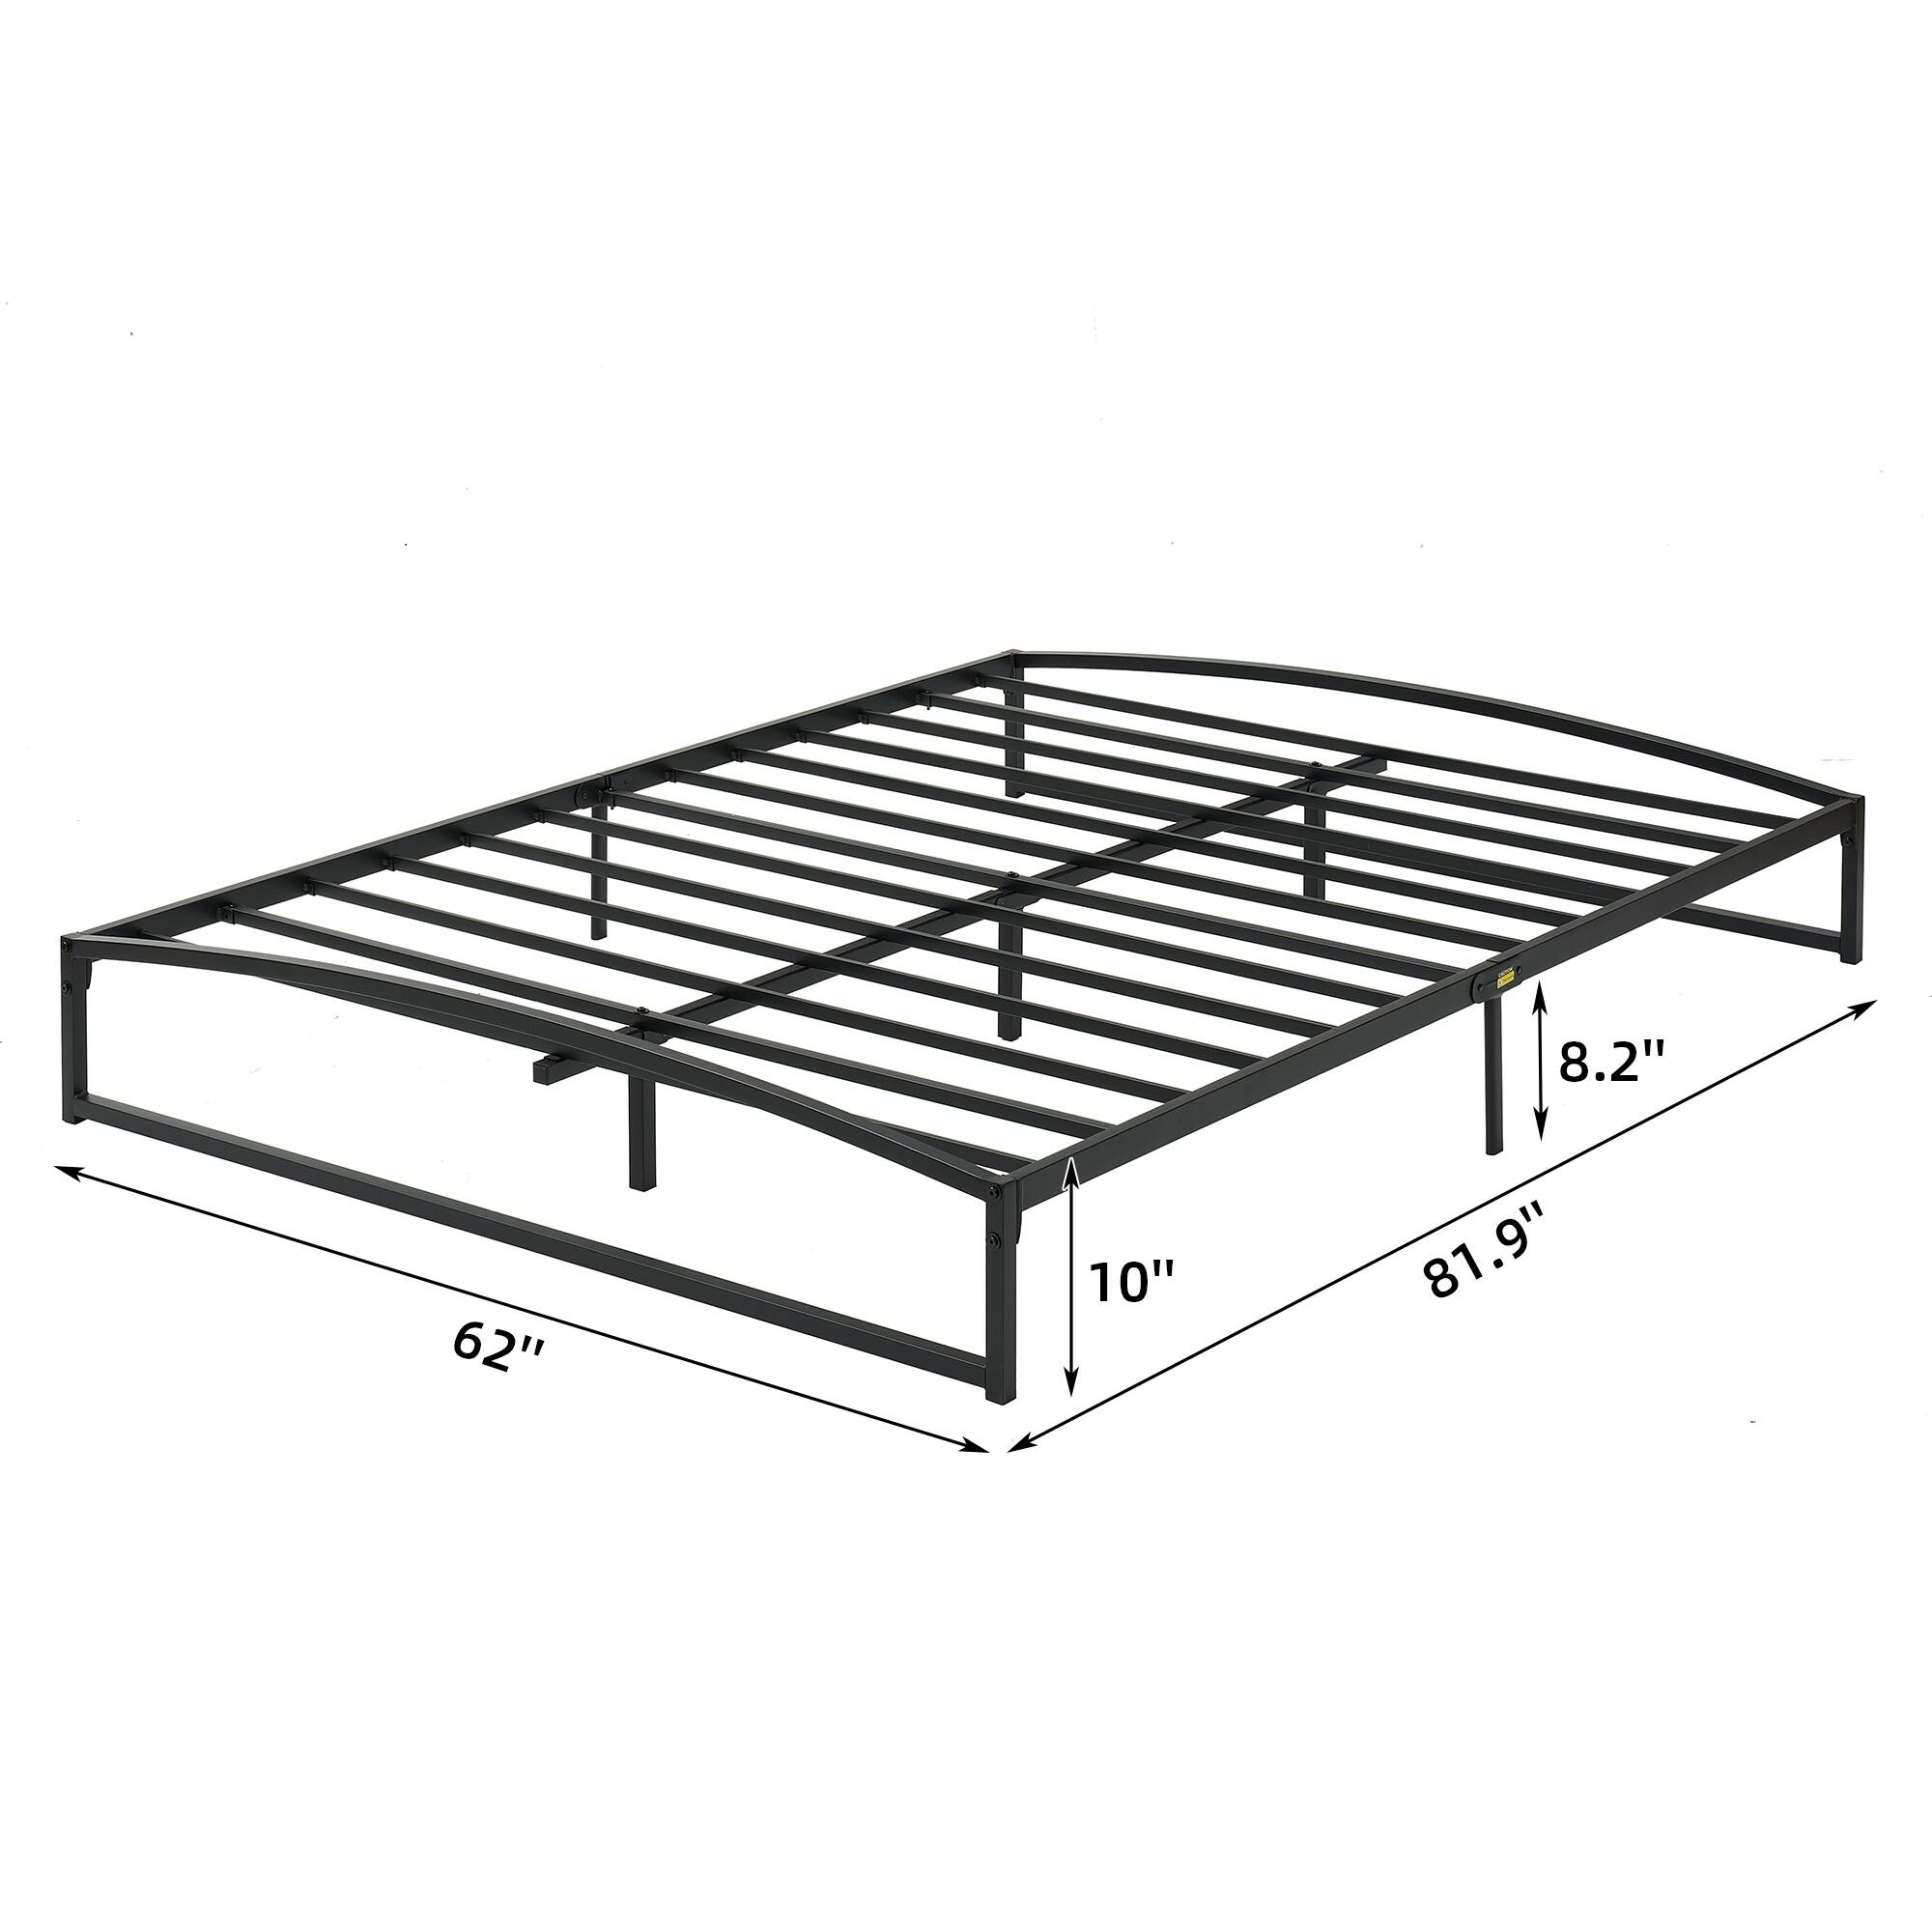 10 Inch Platform Metal Bed Frame Low Profile with Storage - On Sale ...